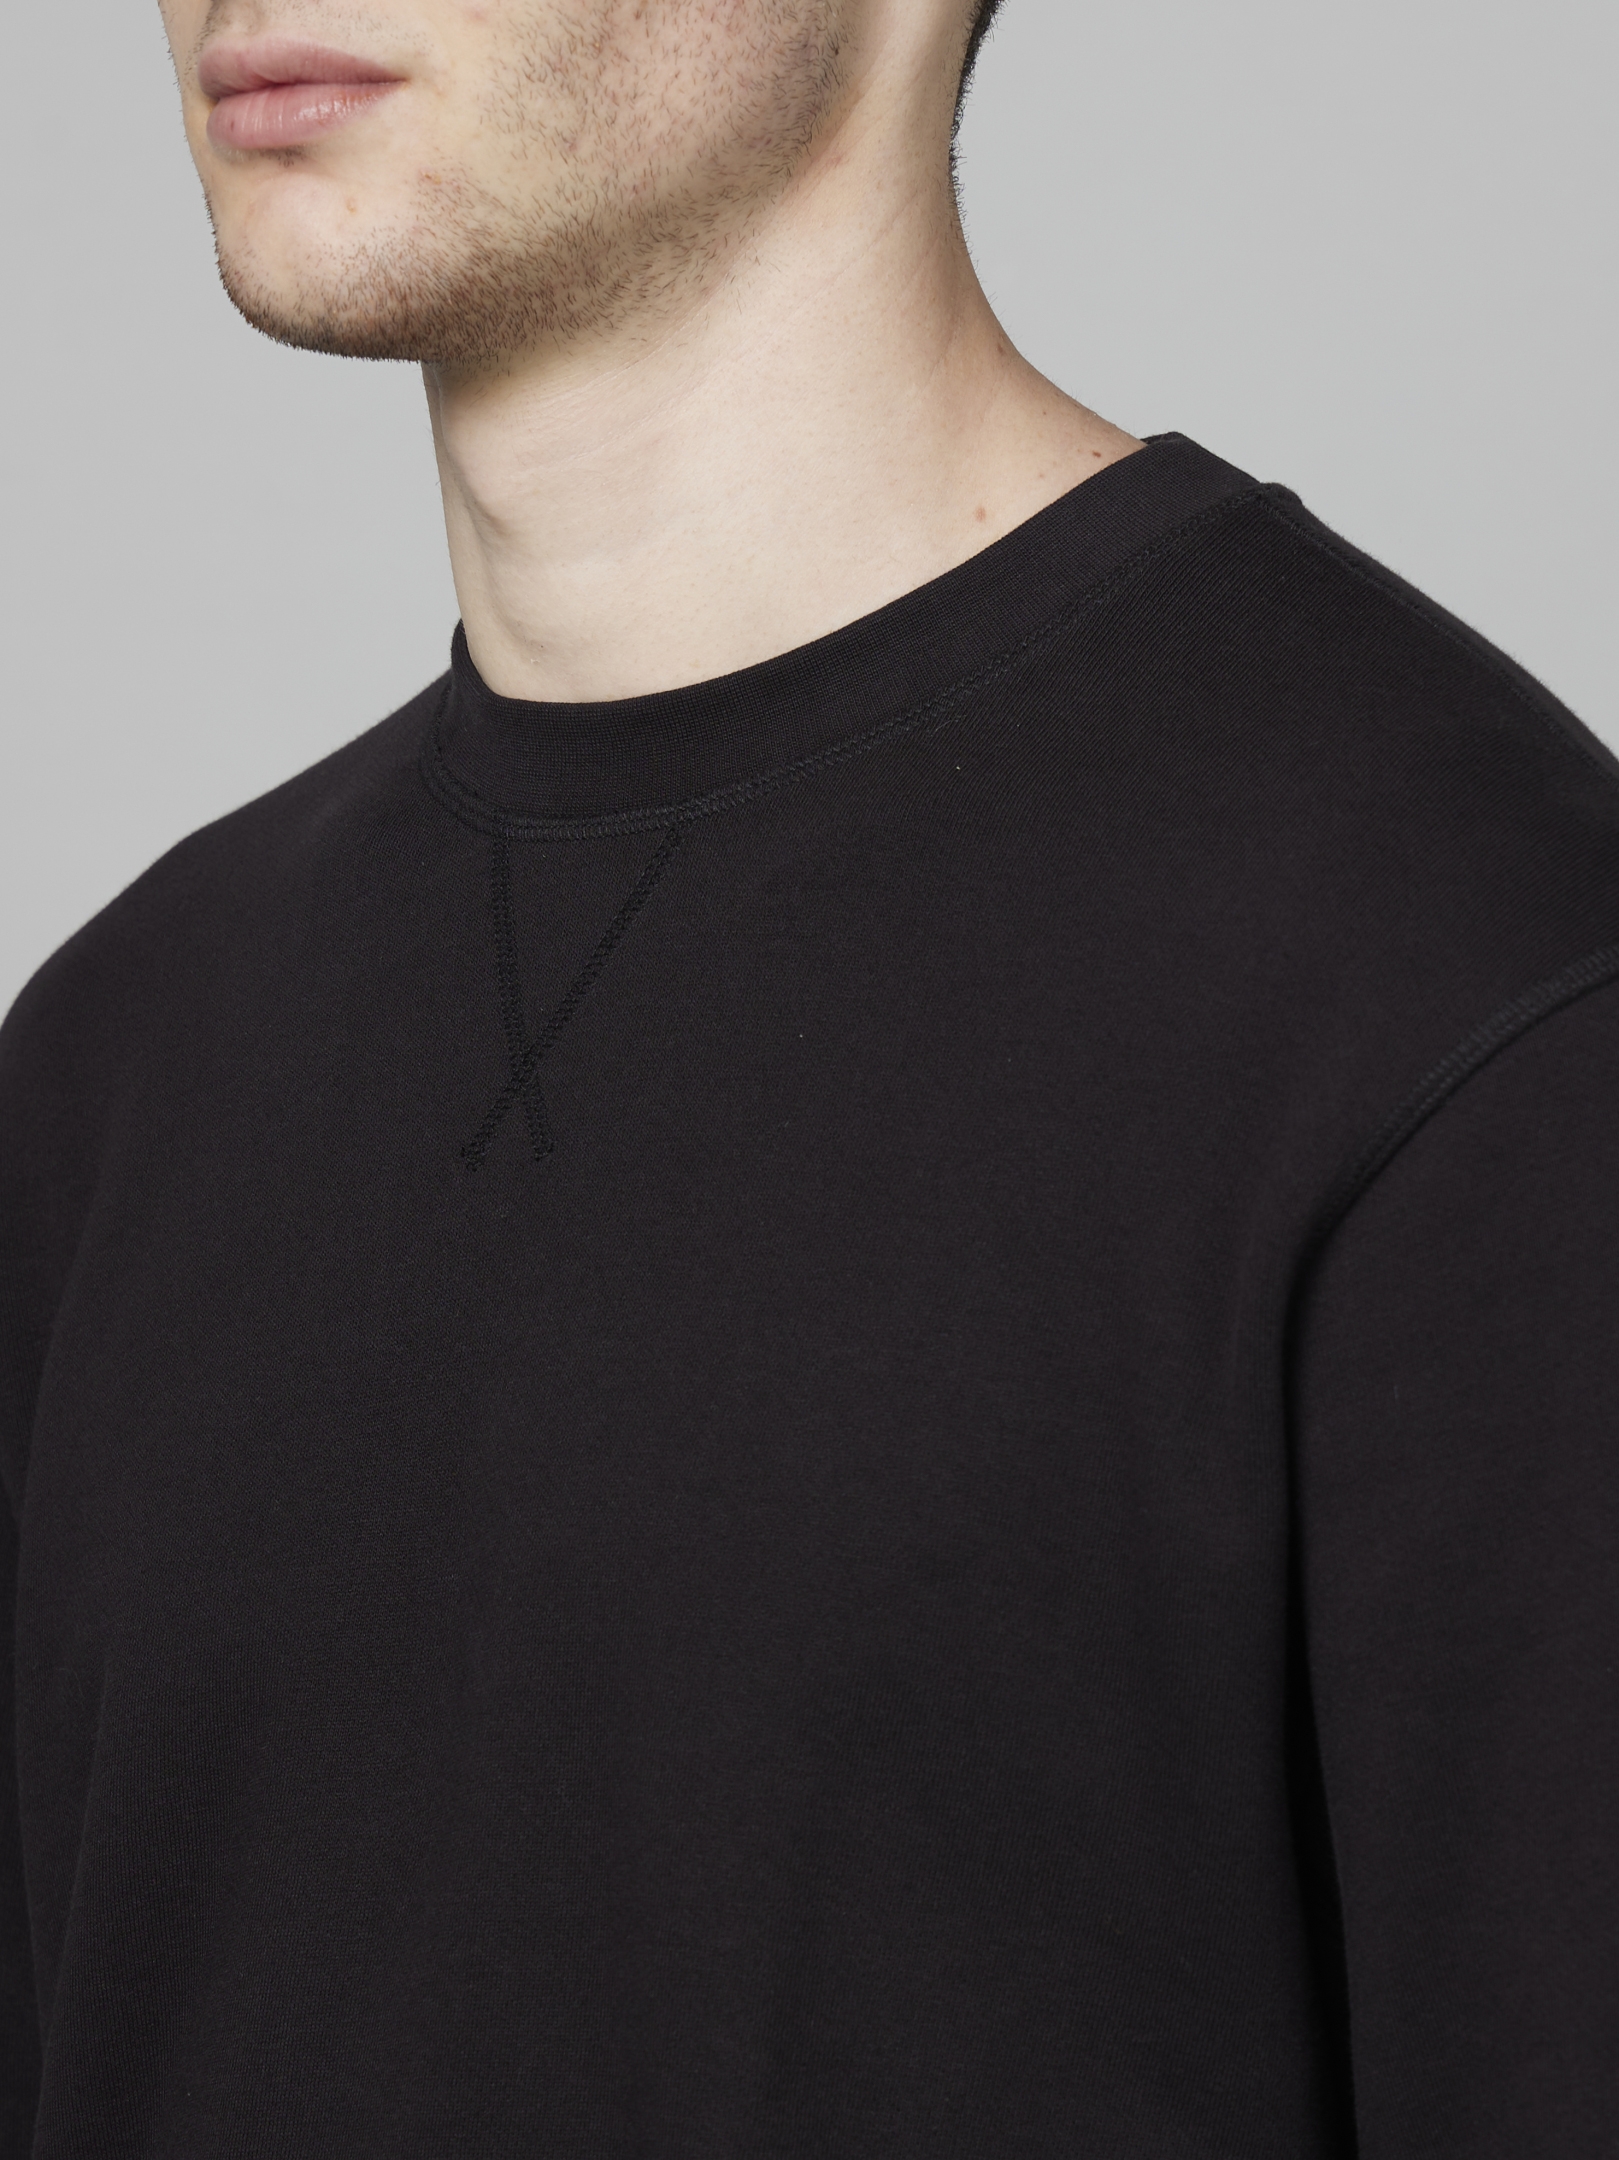 Men's Black Solid Sweaters